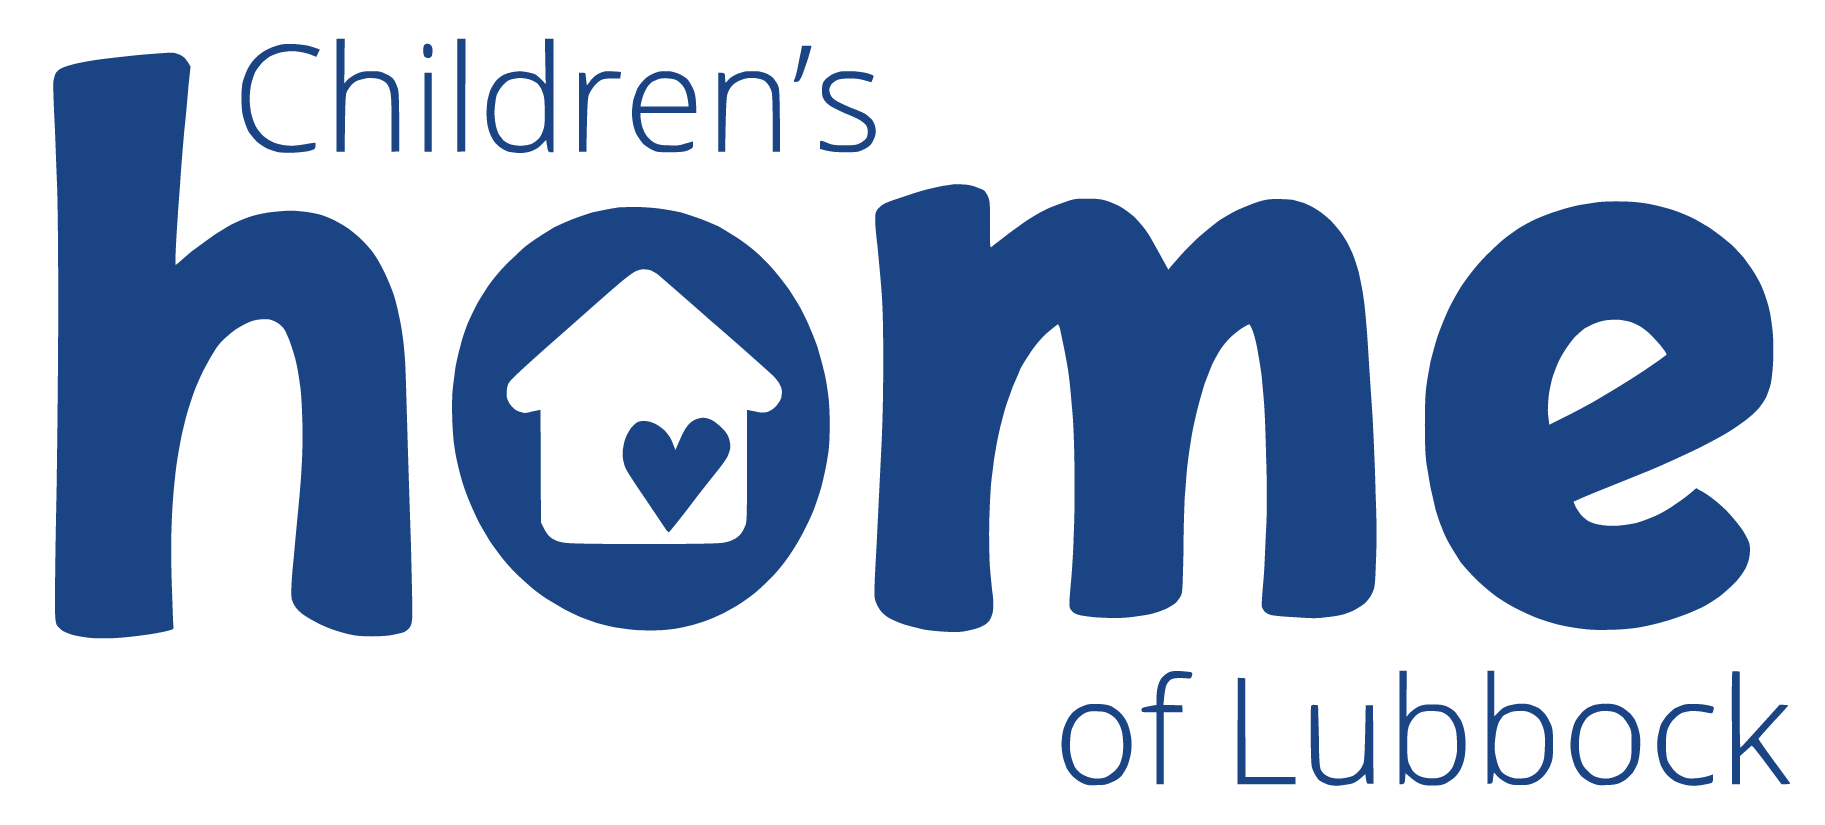 childrens-logo.png